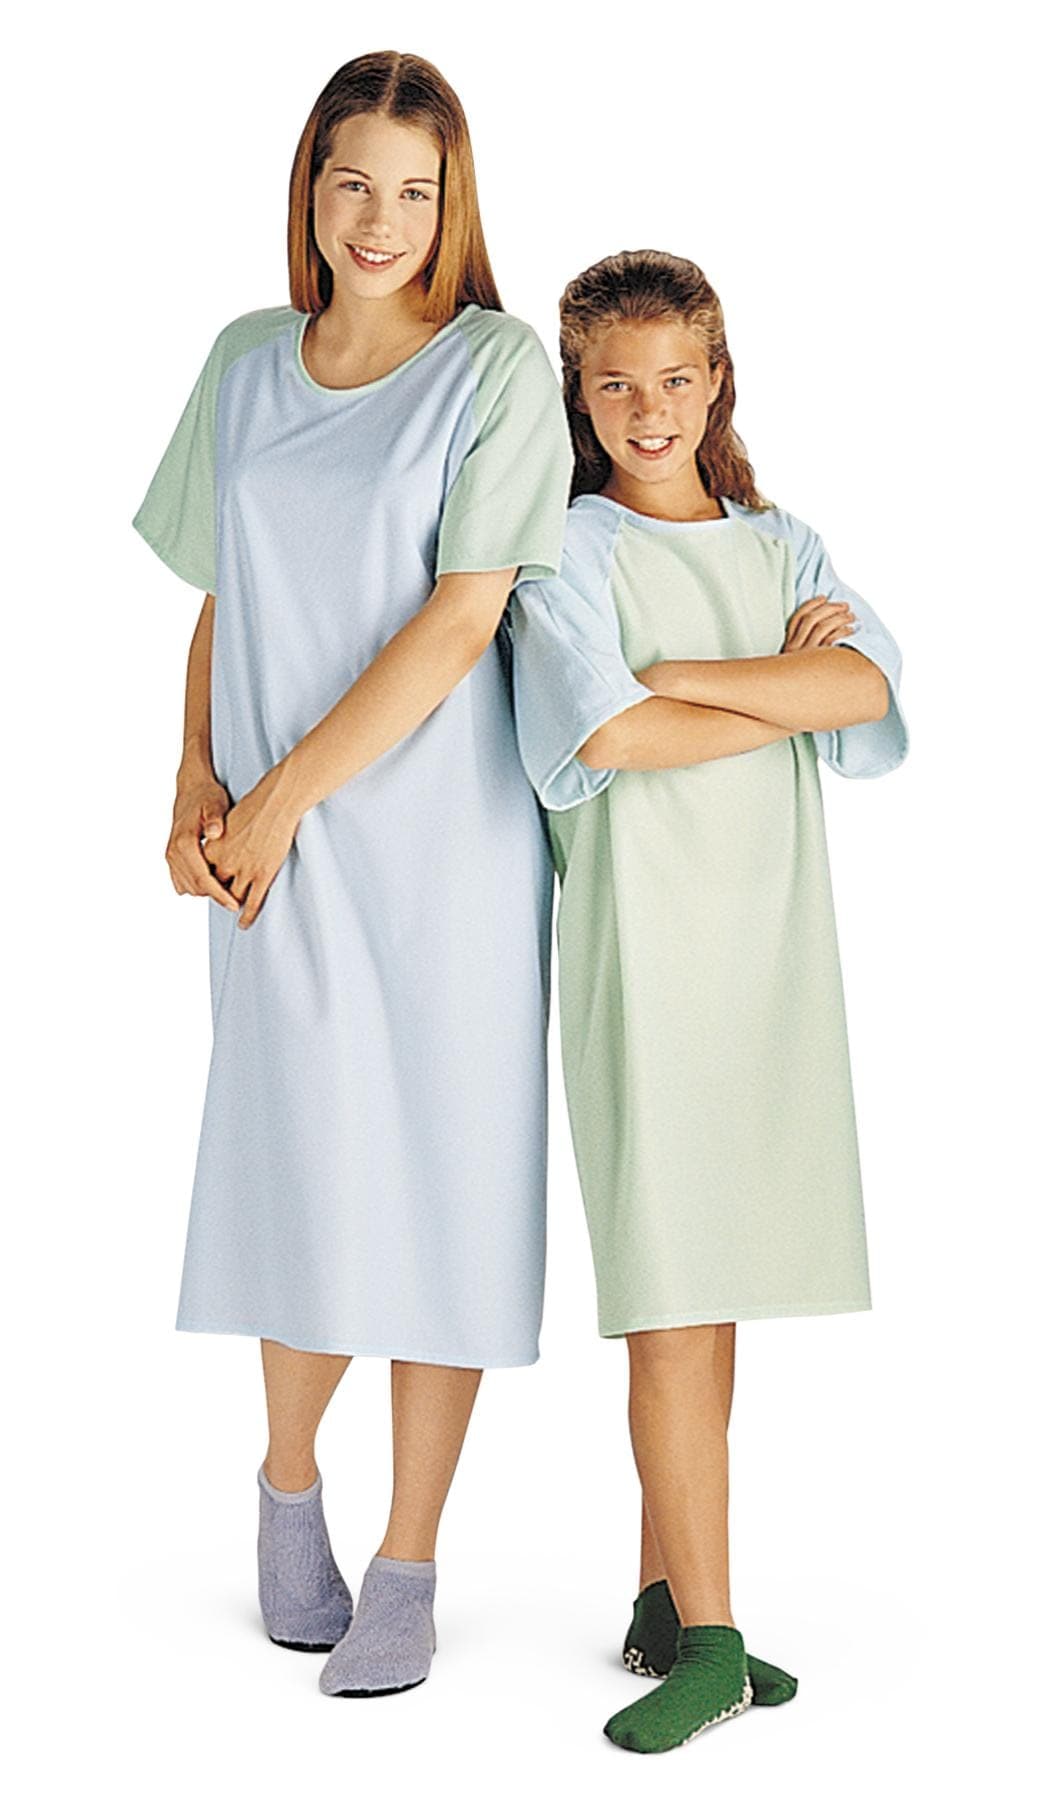 Medline Mint / 8-11 Yrs Medline Comfort-Knit Adolescent Patient Gowns